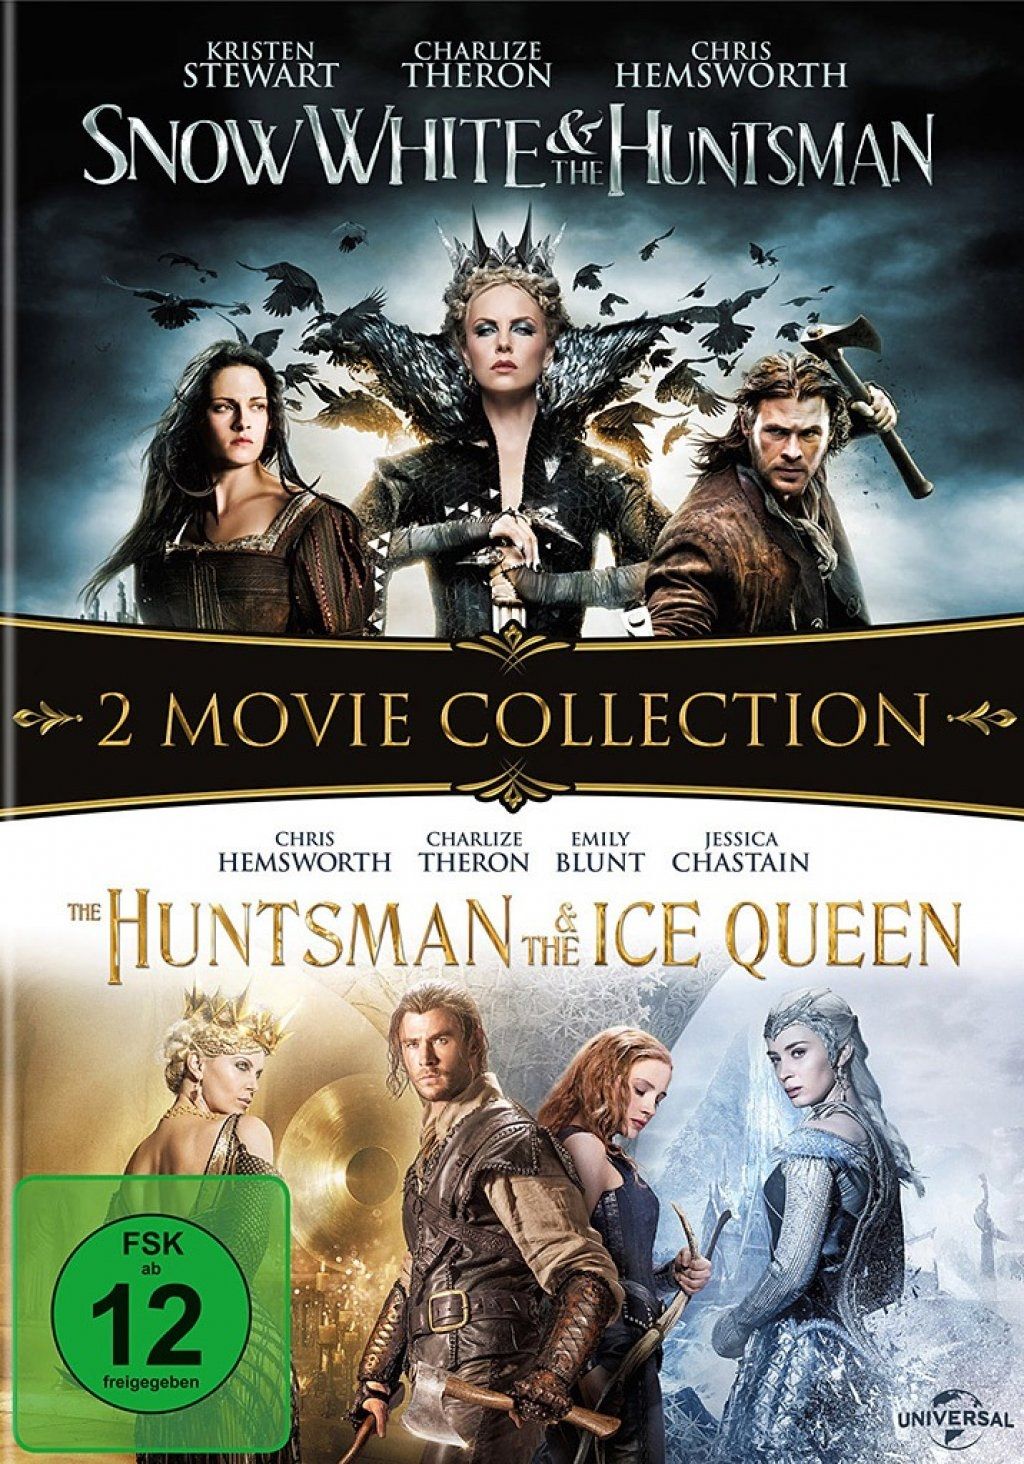 Snow White & the Huntsman / The Huntsman & the Ice Queen (Double Feature) (2 Discs)